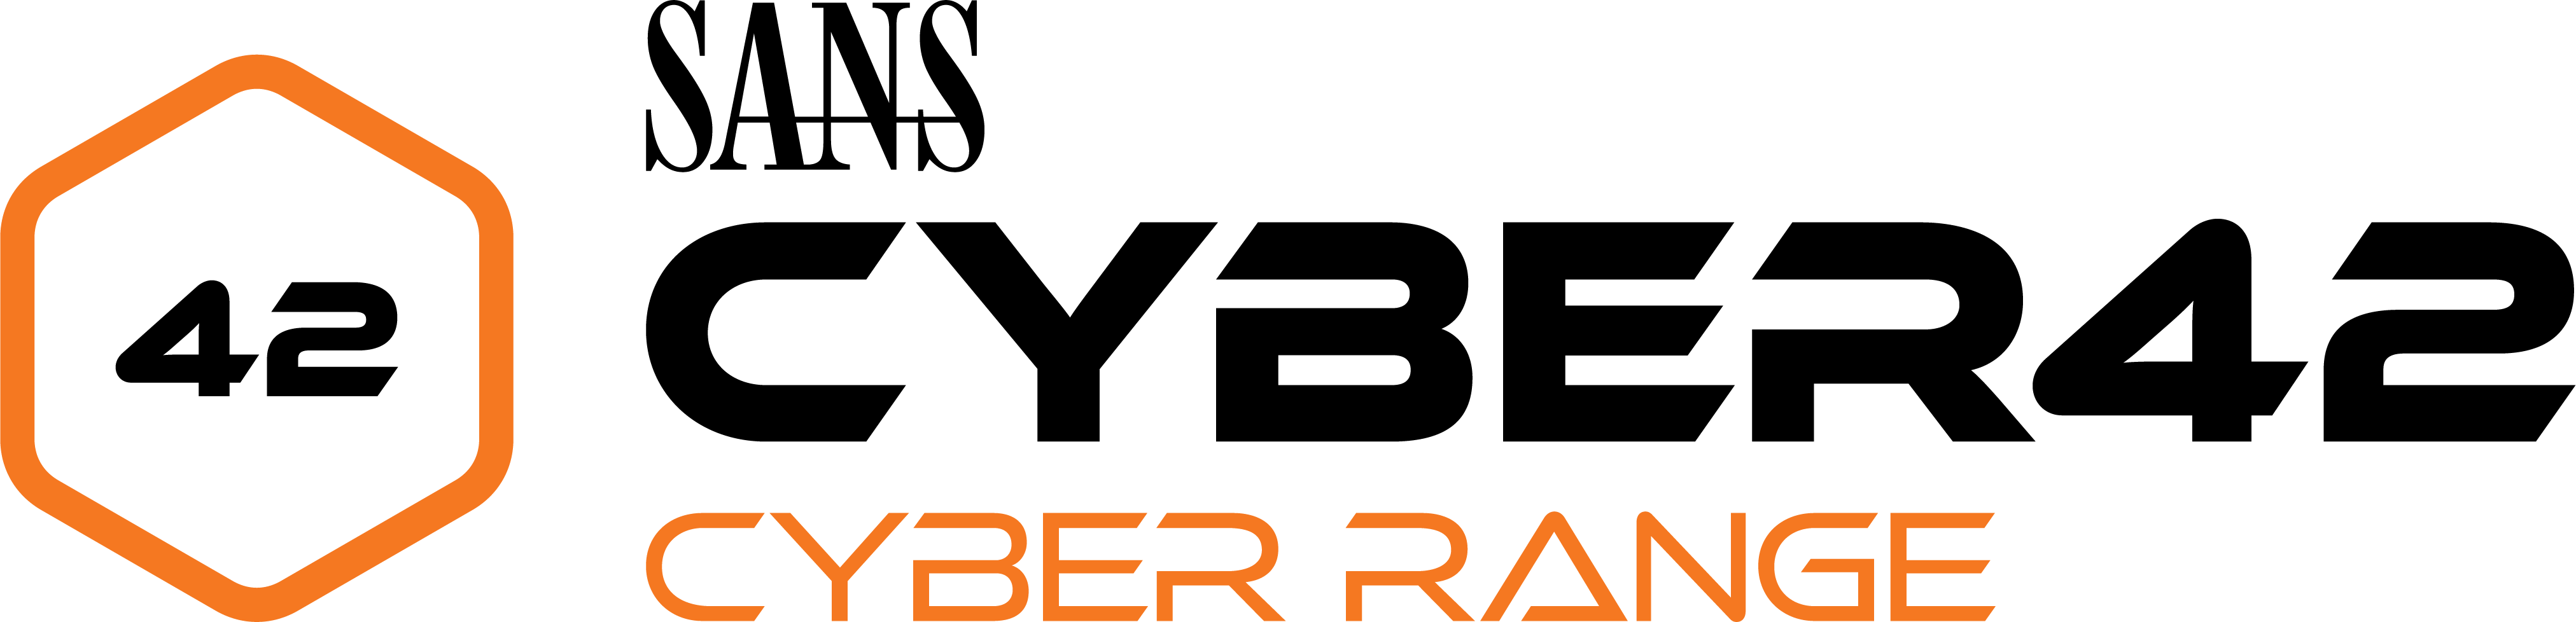 Cyber42_Logo_-_Black-Orange.png